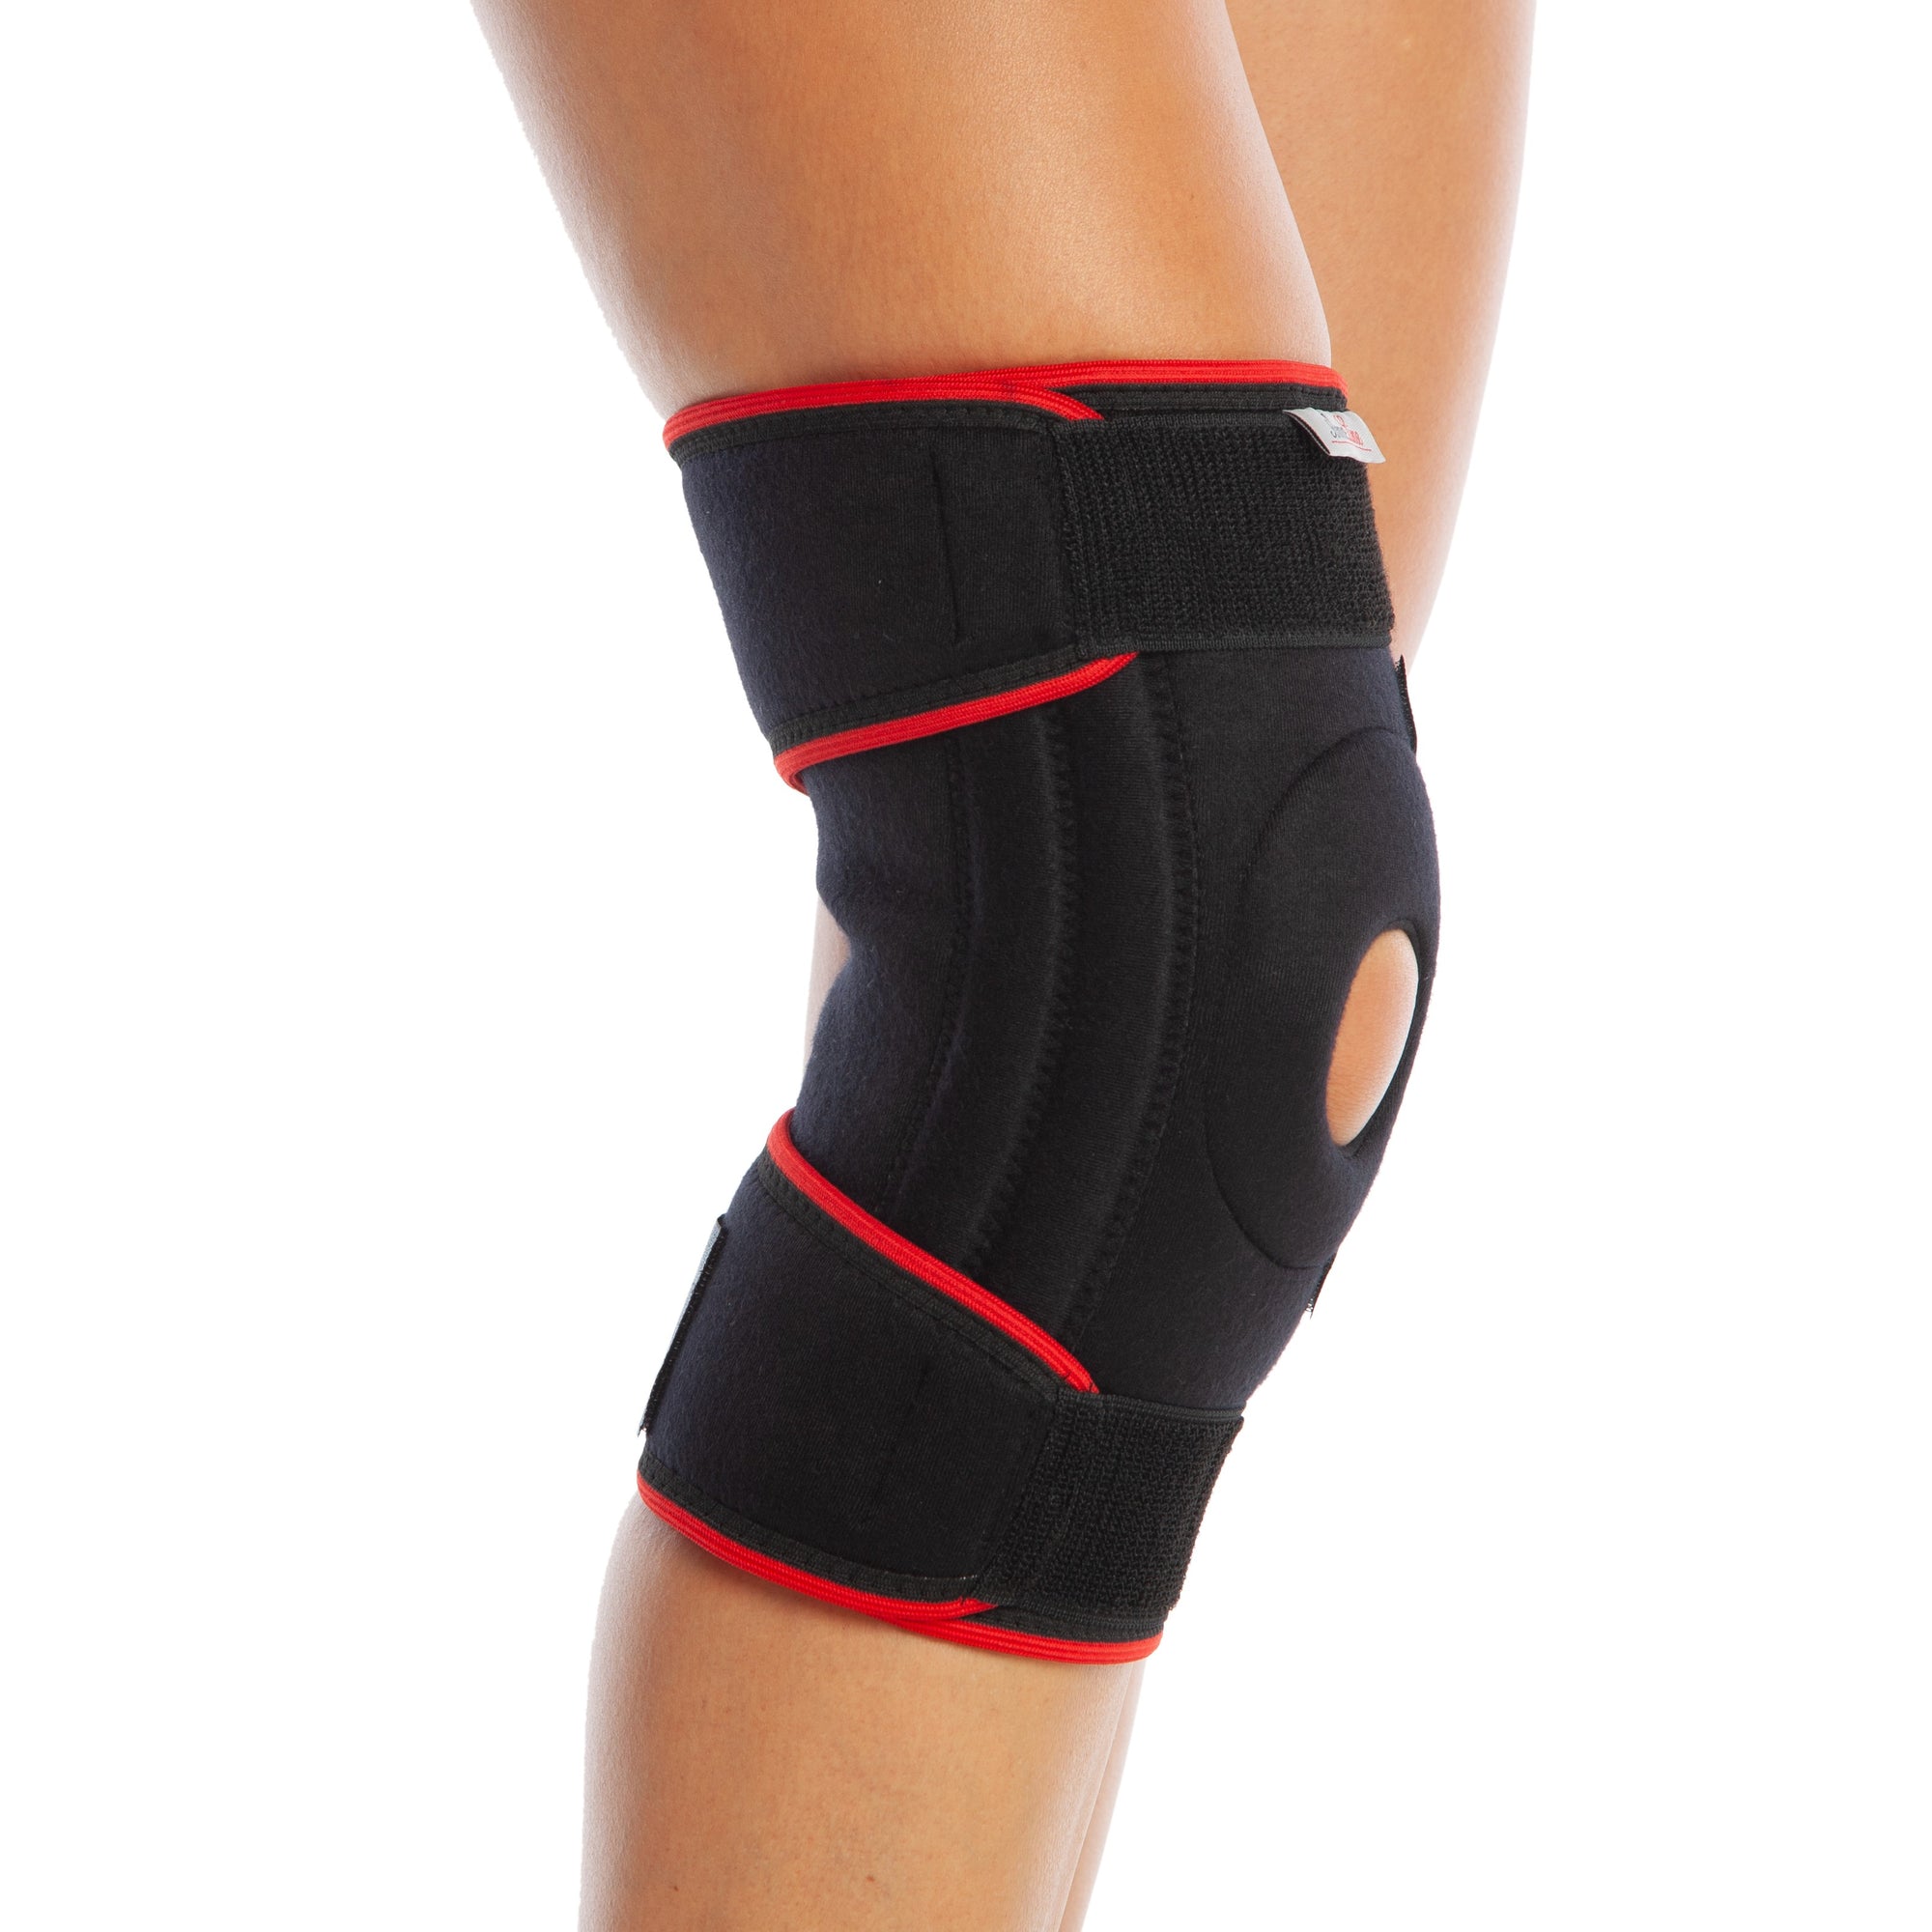 Ligament Knee Brace - Standard